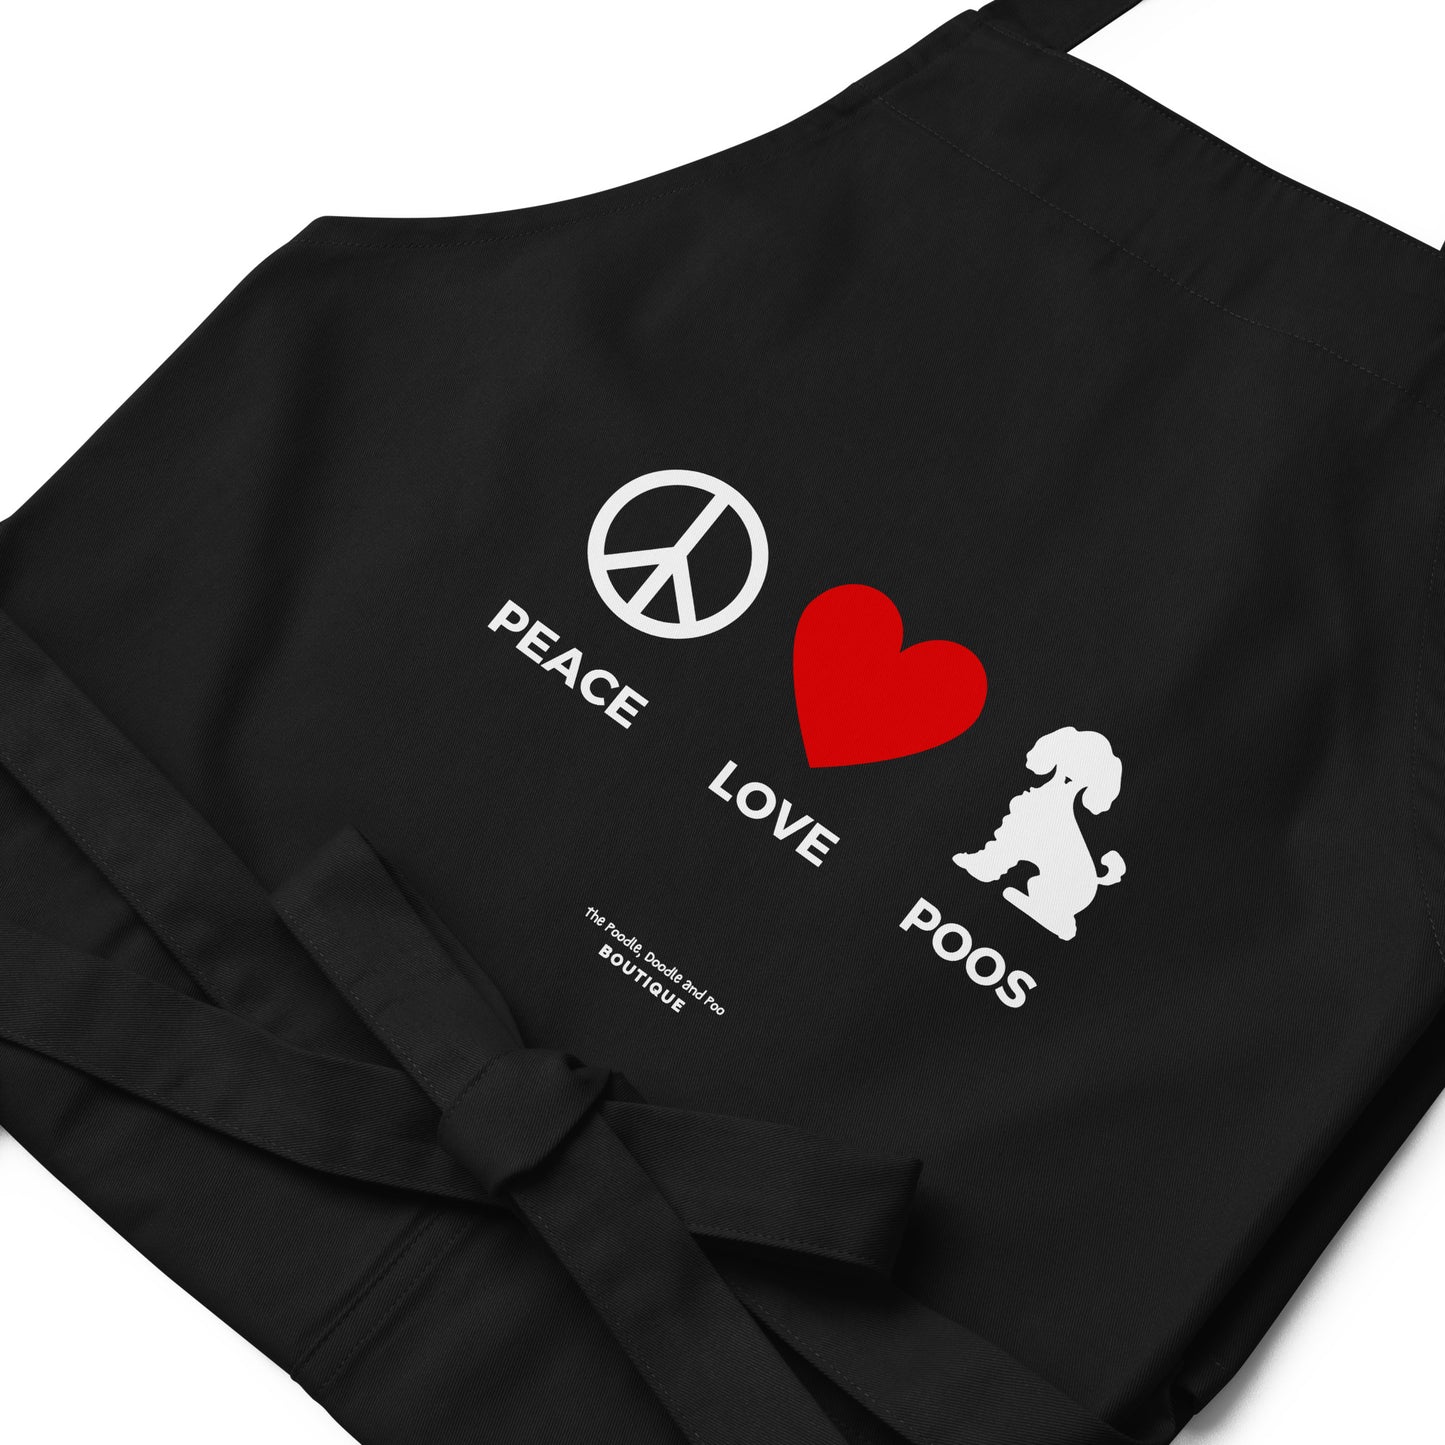 "Peace, Love Poos" Organic cotton apron